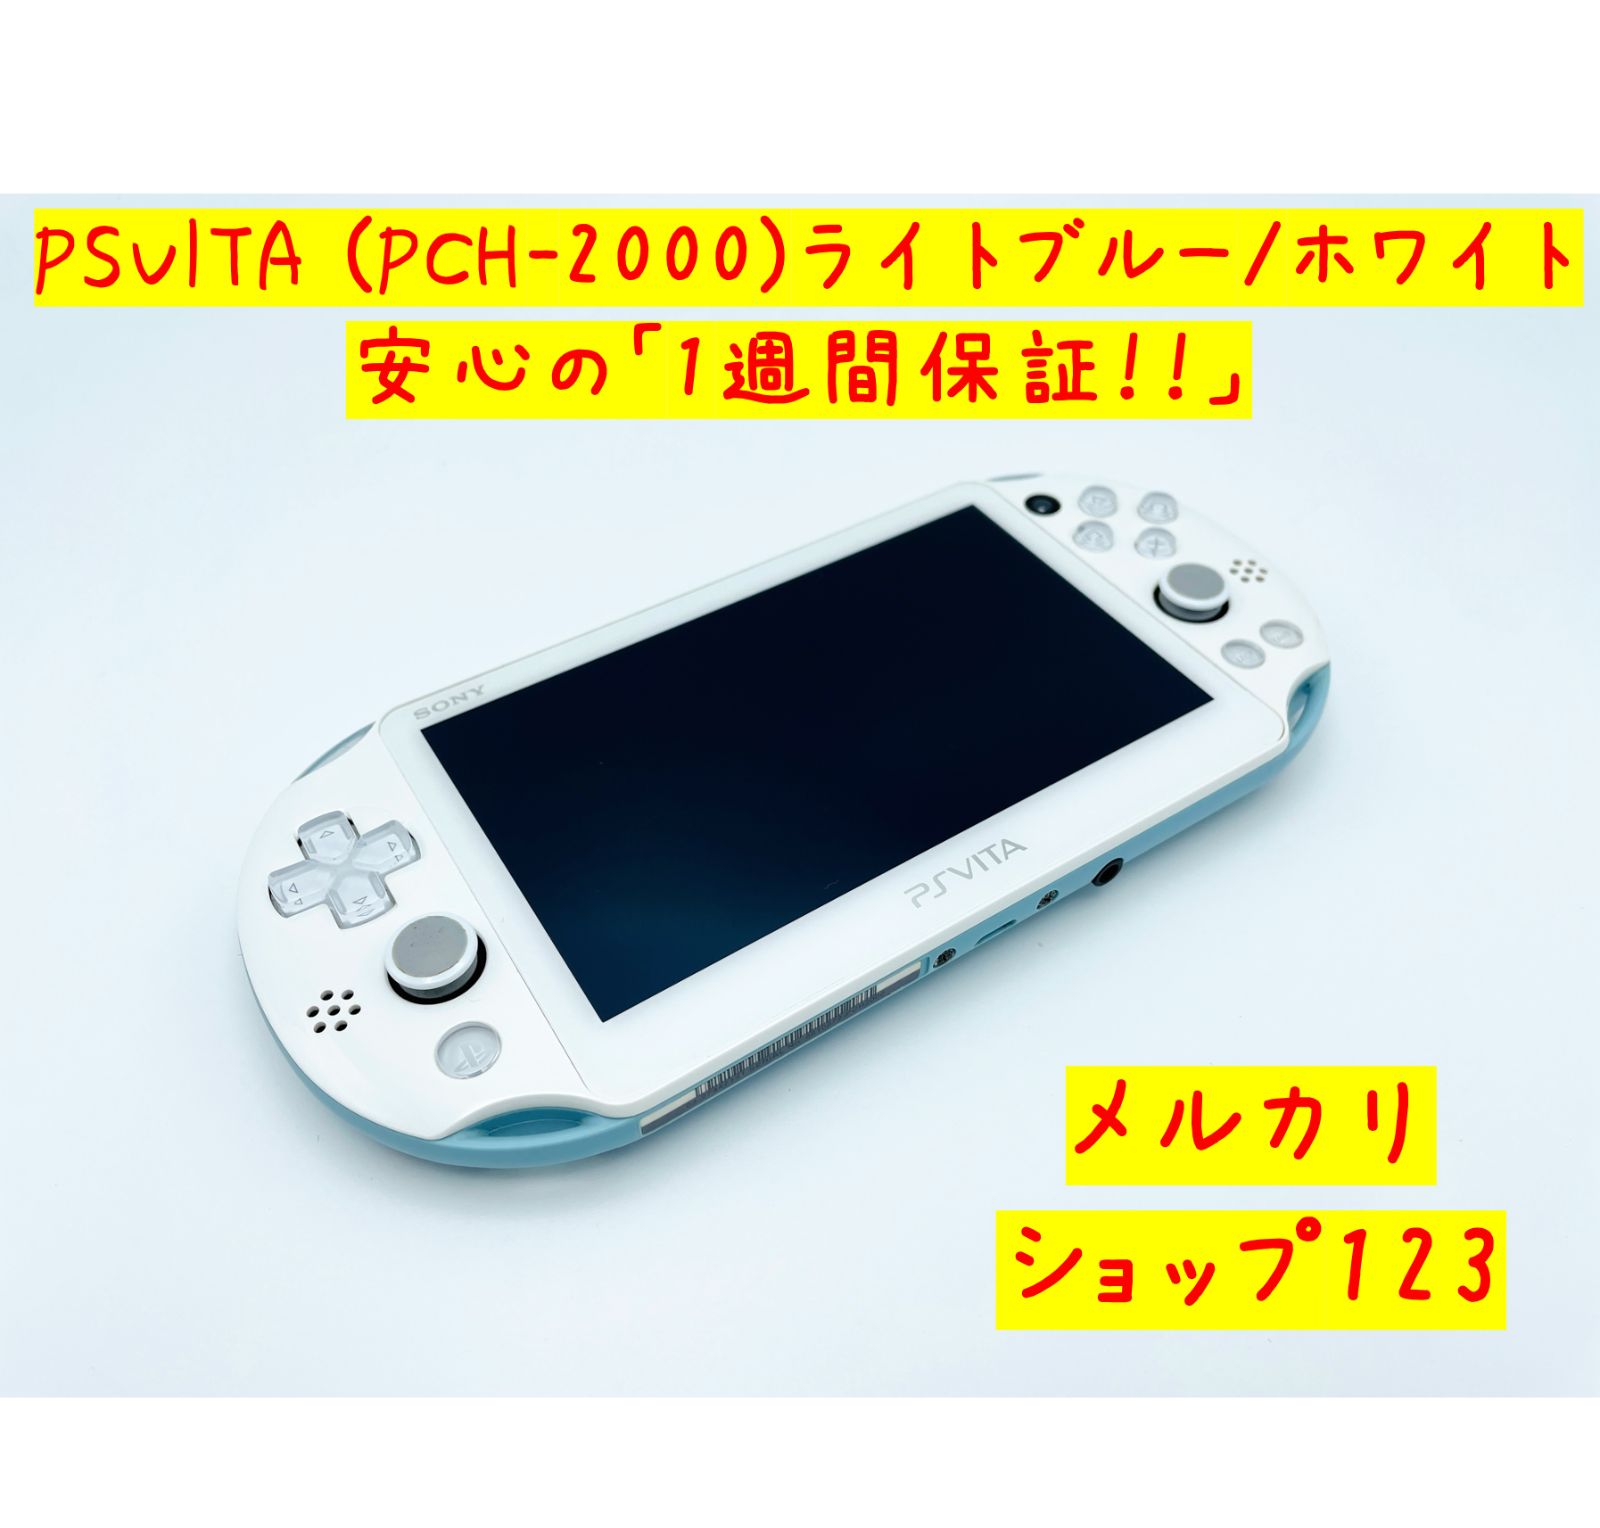 PSVITA 本体 Wi-Fiモデル ライトブルー/ホワイト PCH-2000